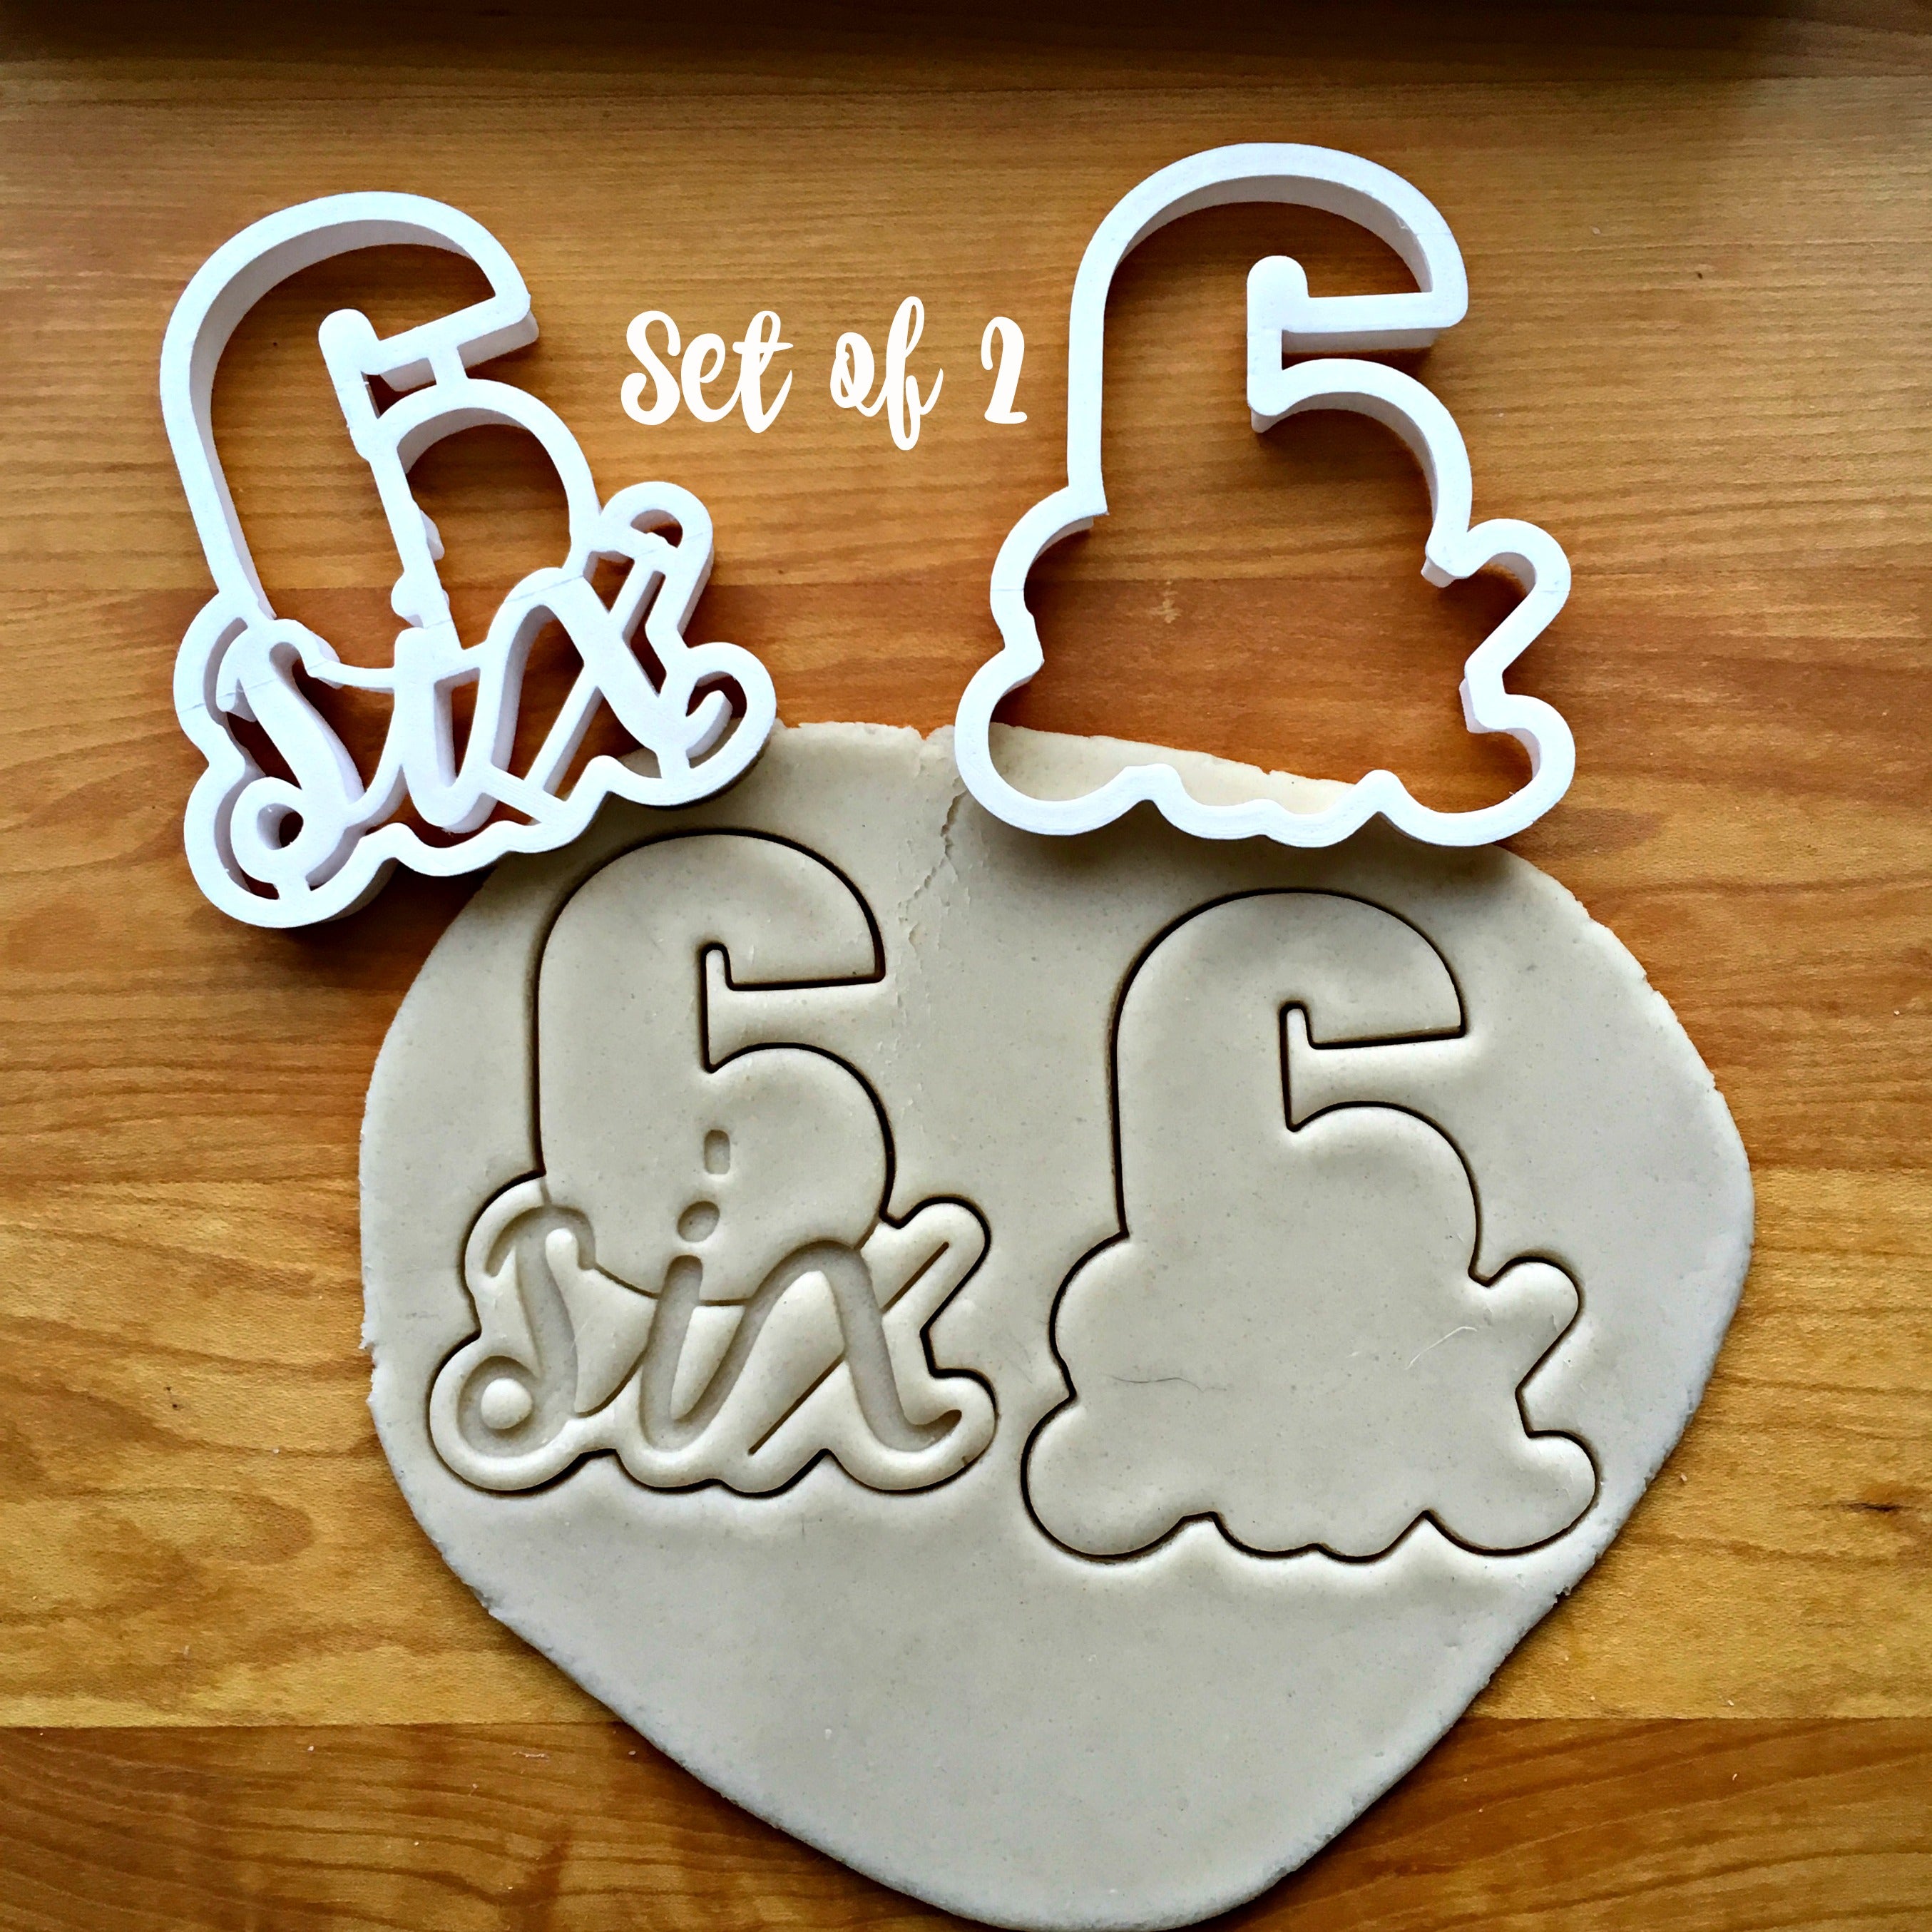 Set of 2 Lettered Number 6 Cookie Cutters/Dishwasher Safe